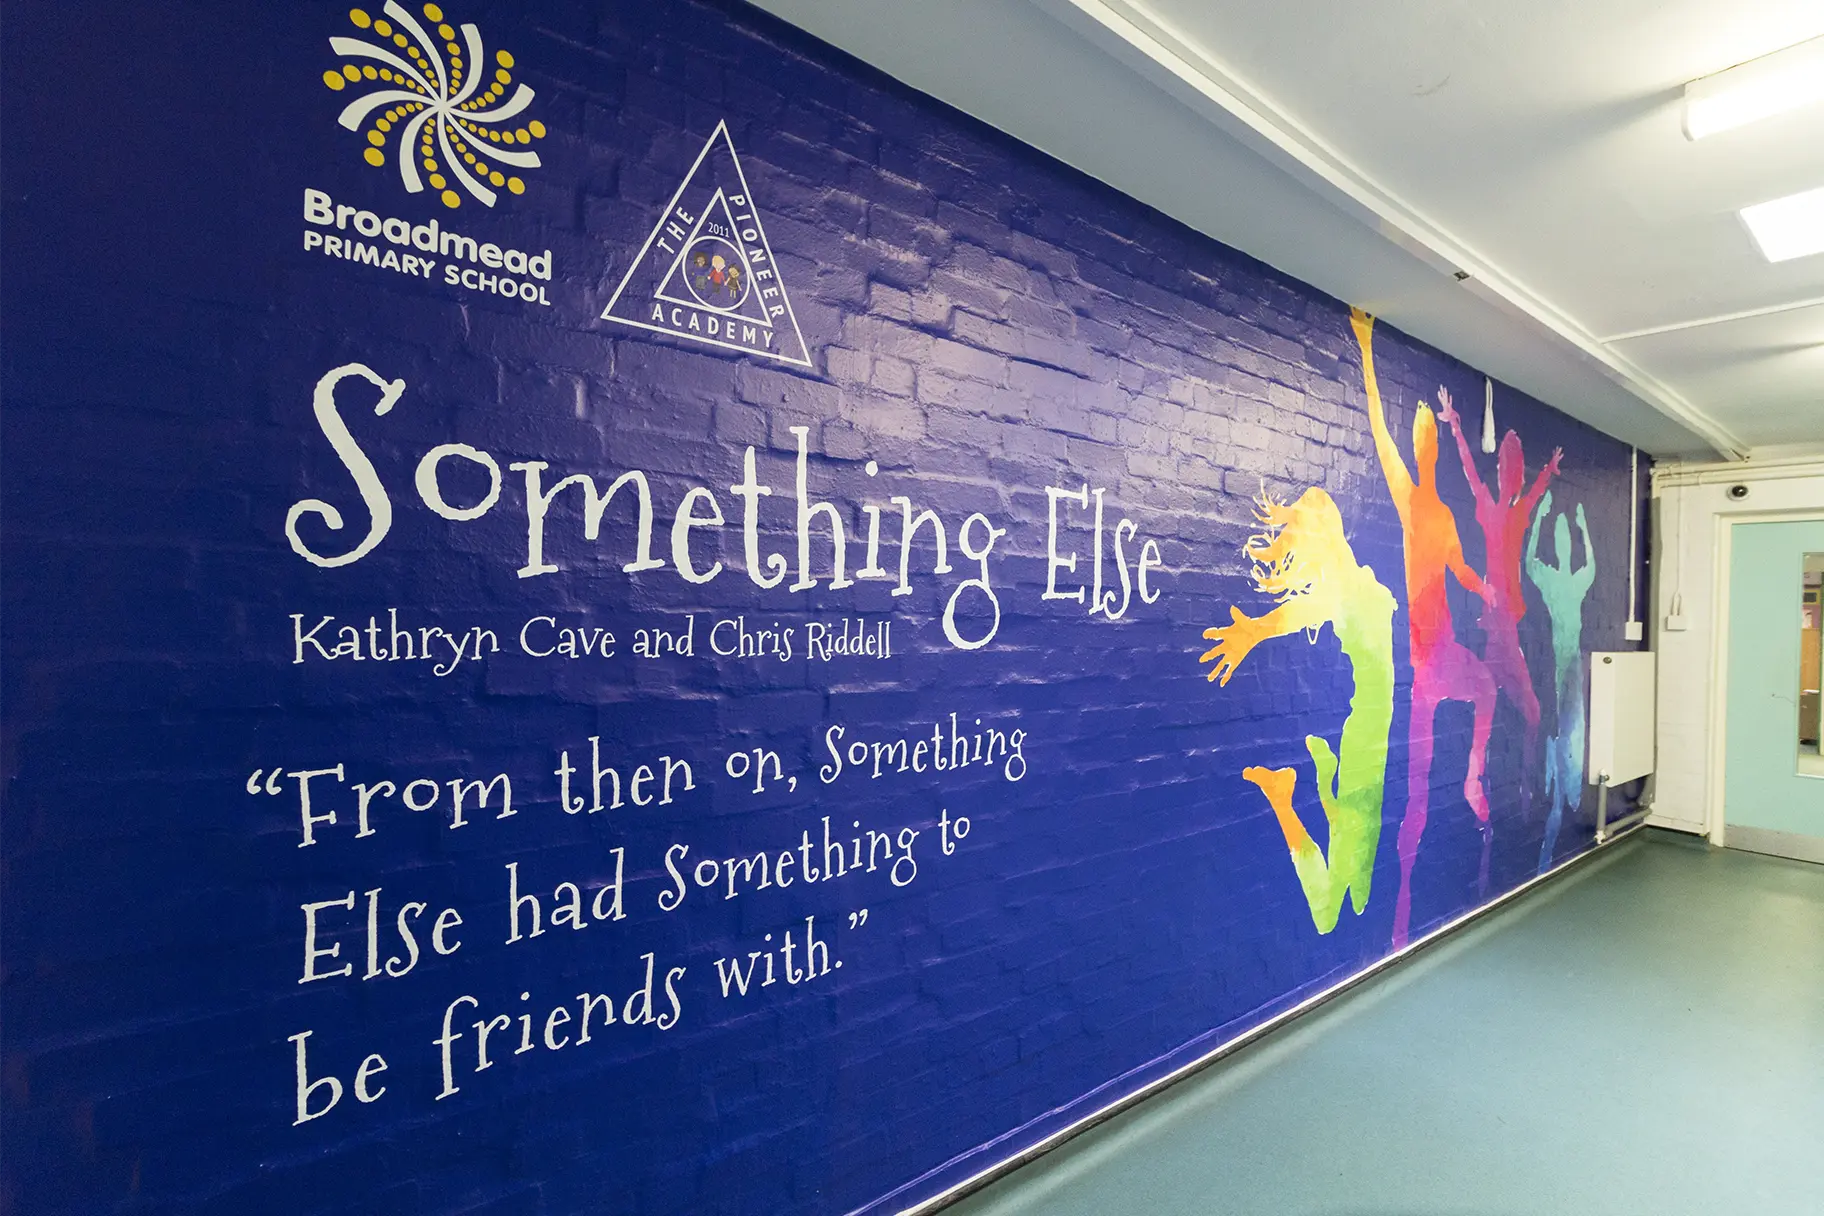 Broadmead Primary School English literature story themed Corridor Wall Art